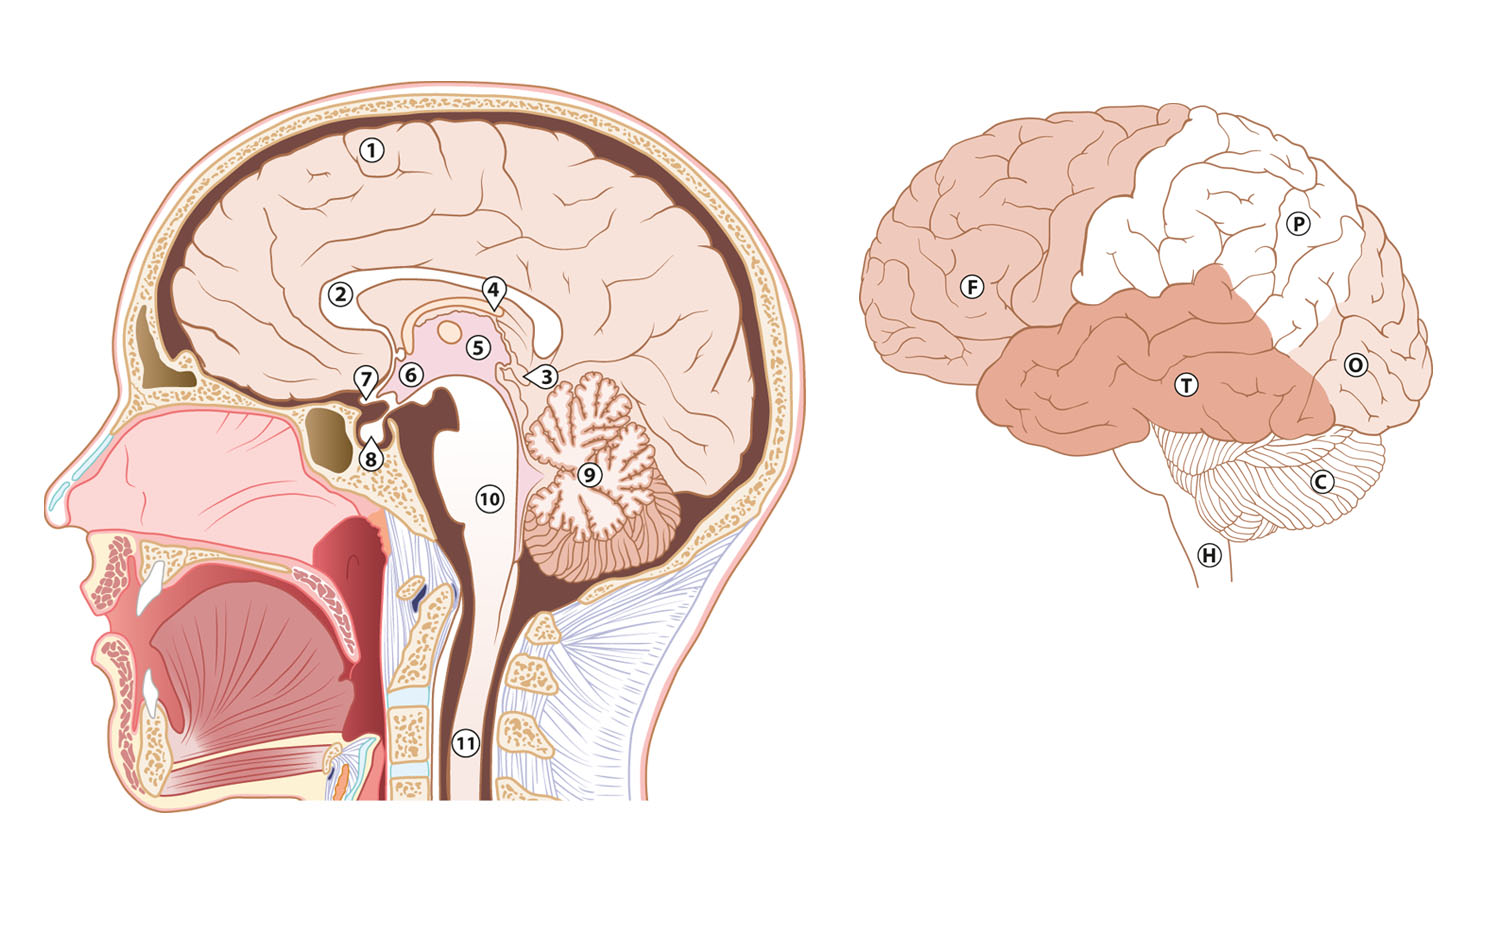 brain section